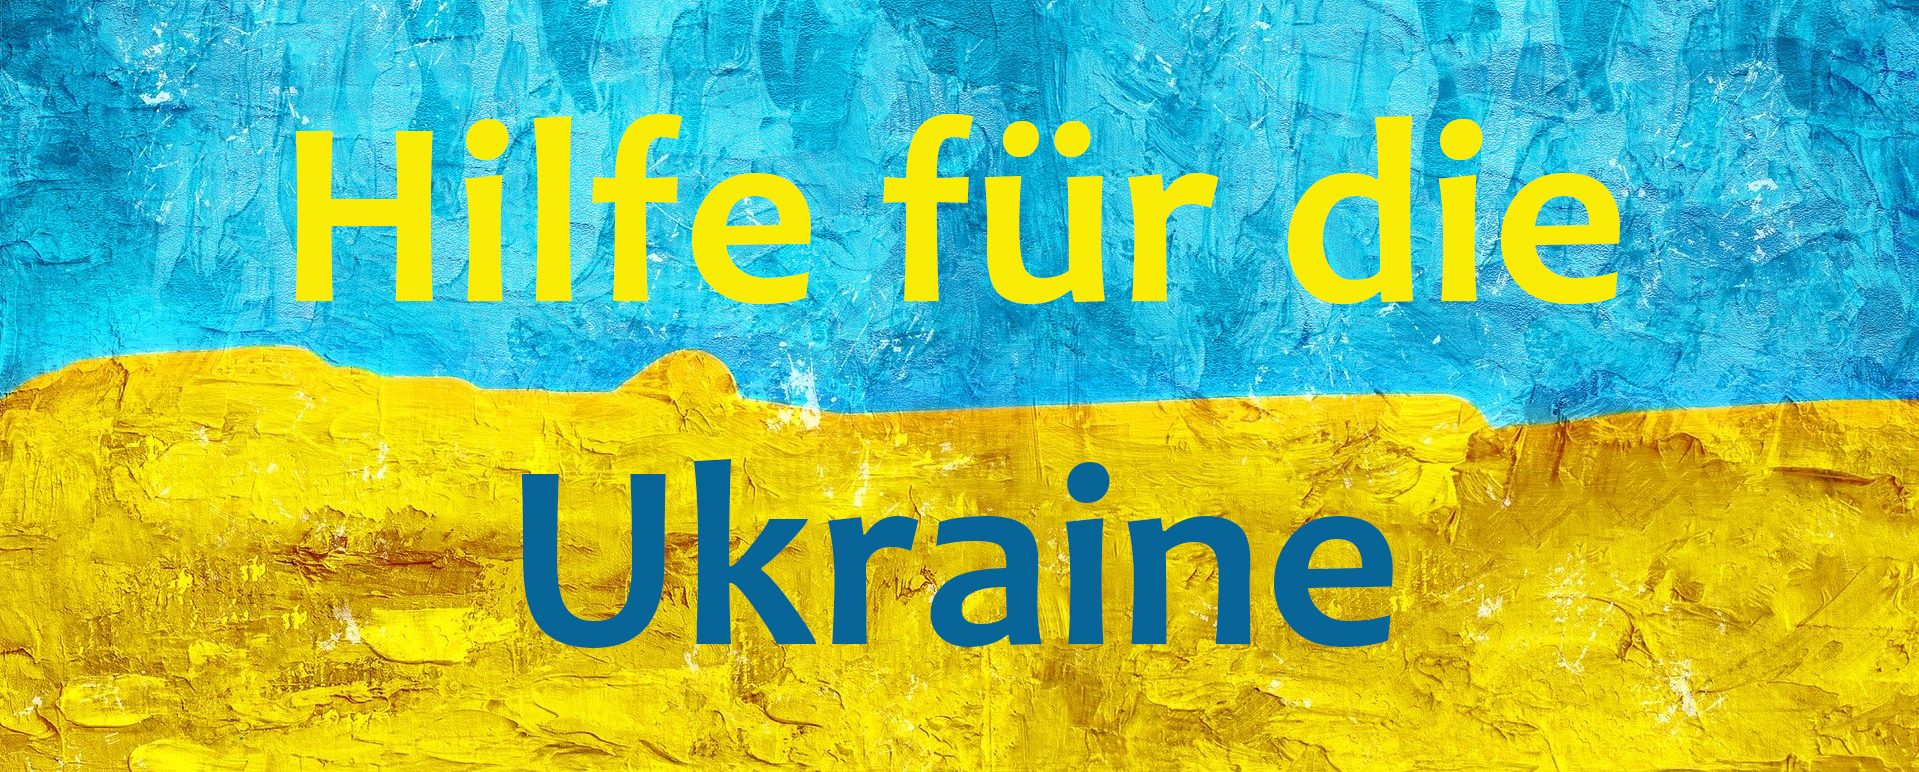 Hilfe fr die Ukraine